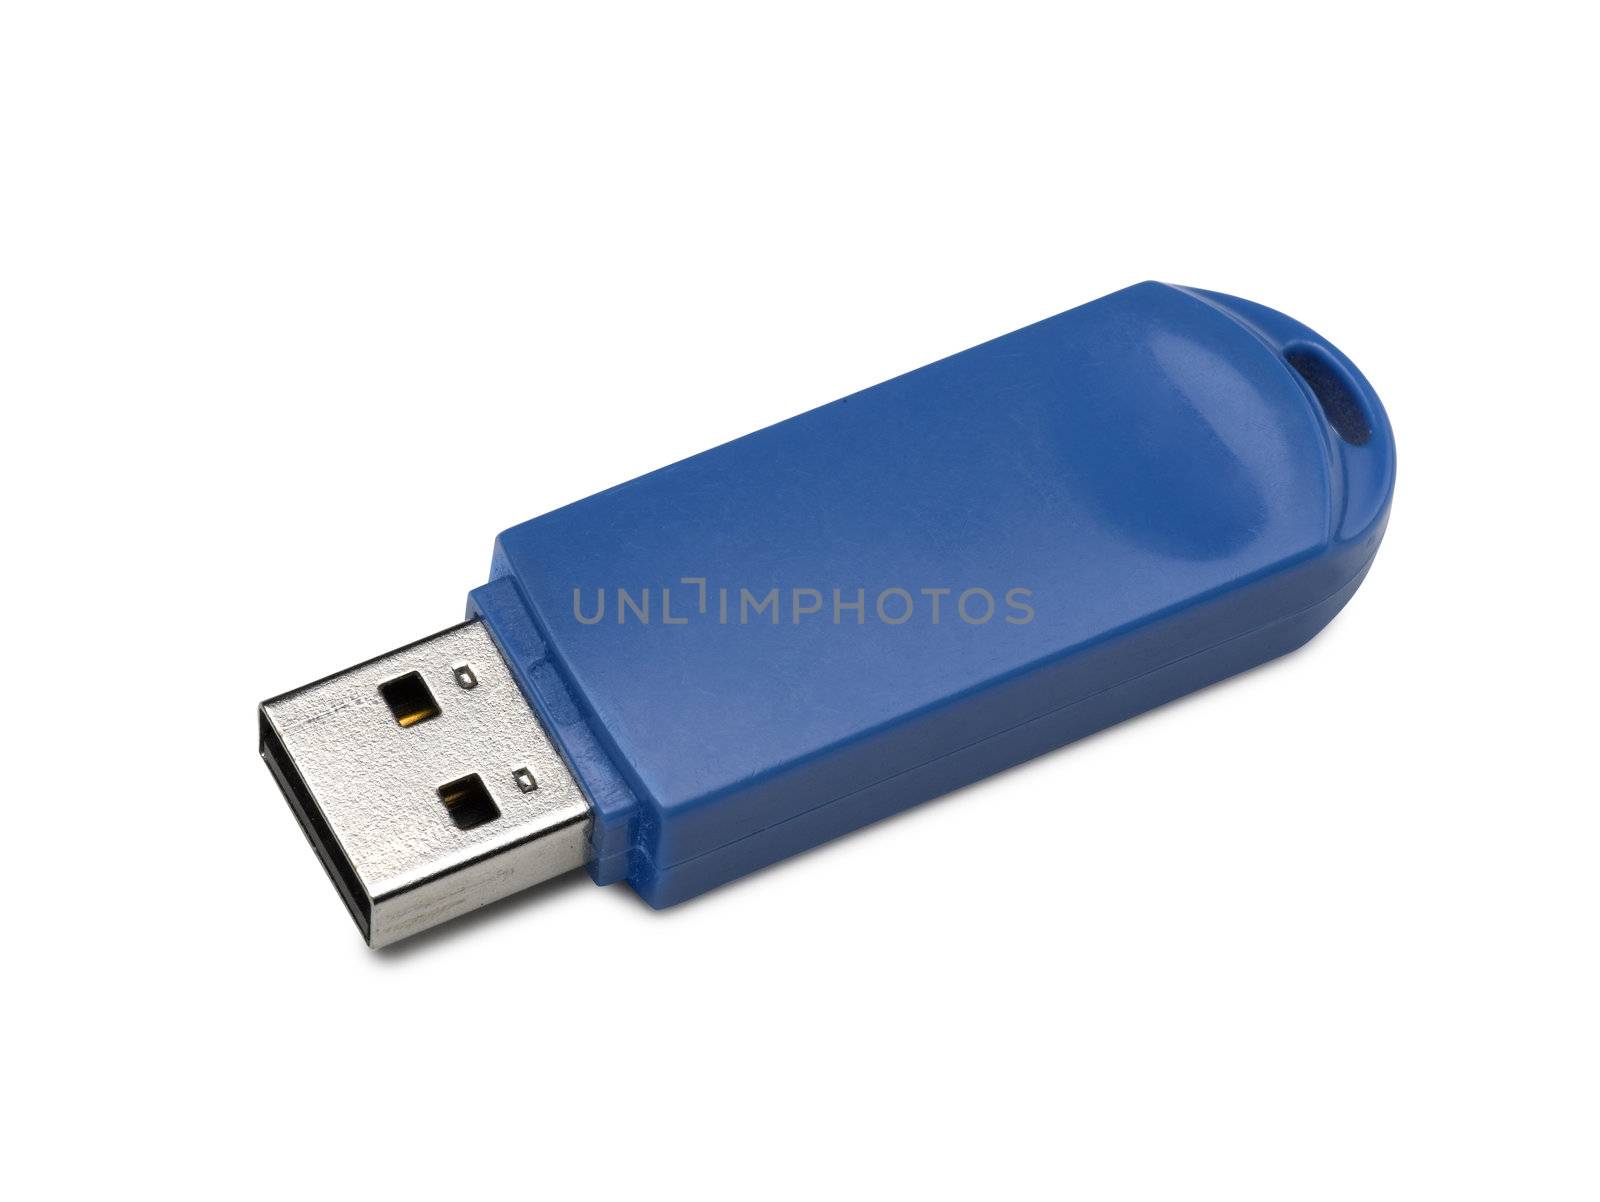 USB memory stick  by pbombaert